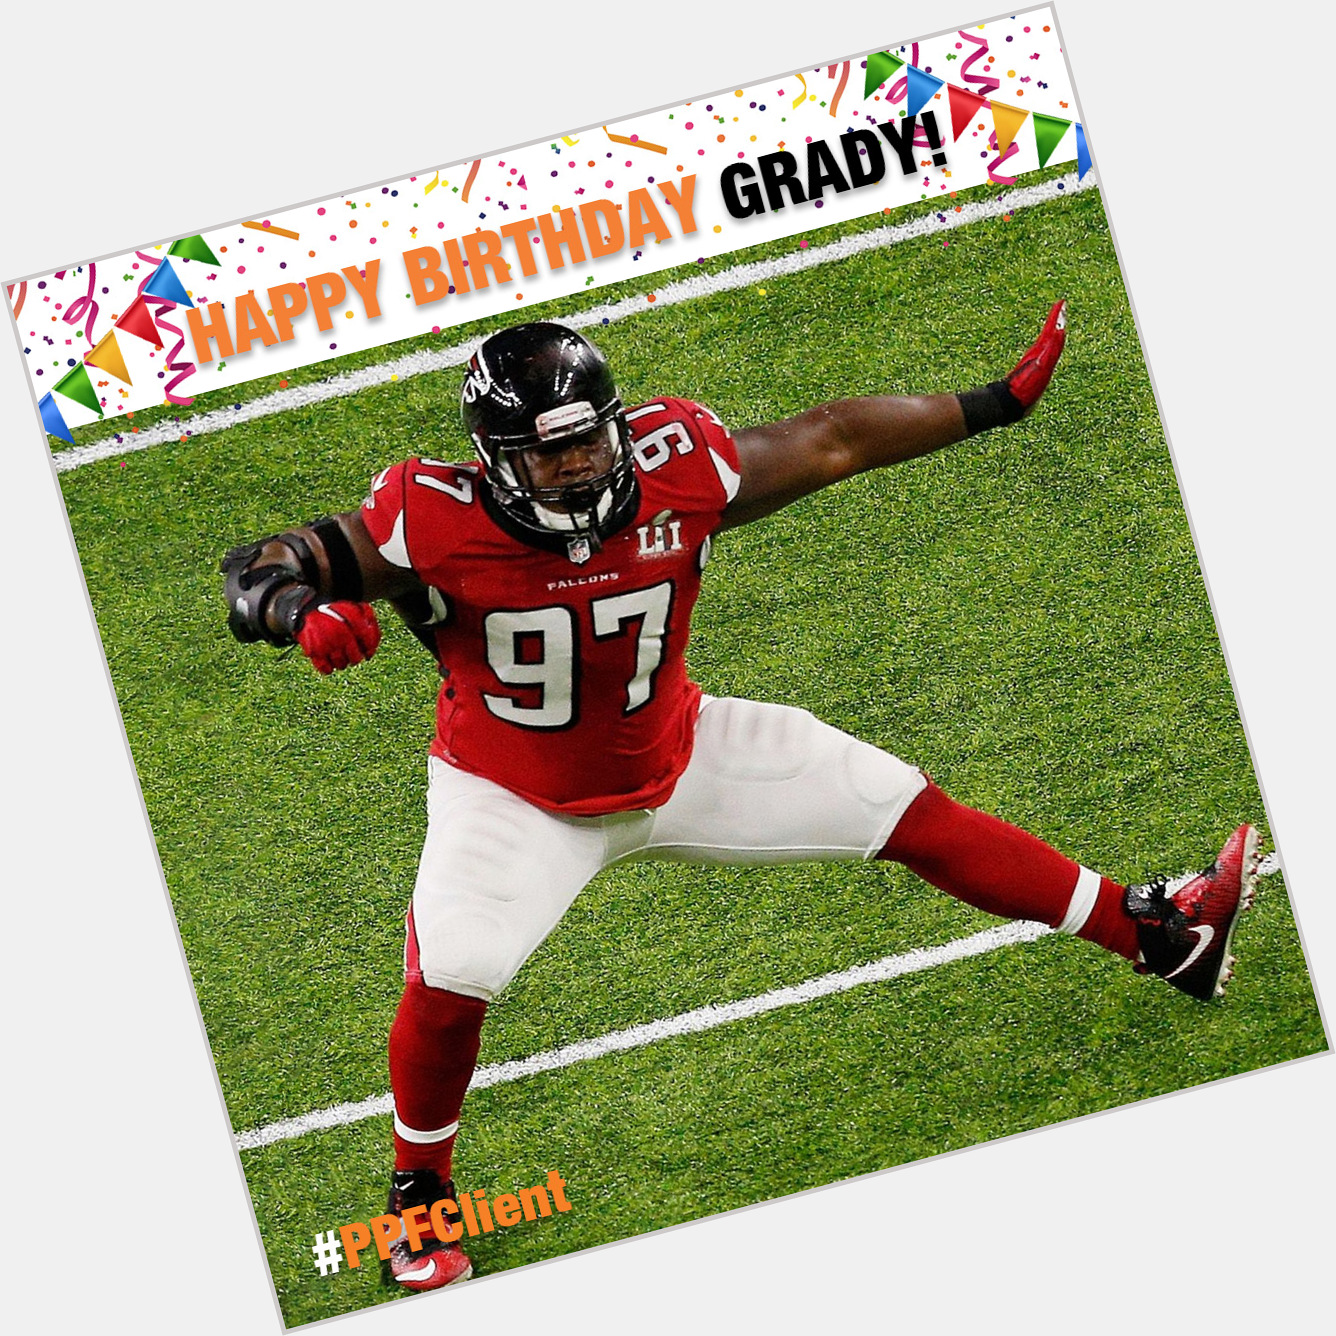 Wishing a very happy (belated) birthday to philanthropist, and NFL Pro-Bowler Grady Jarrett! 